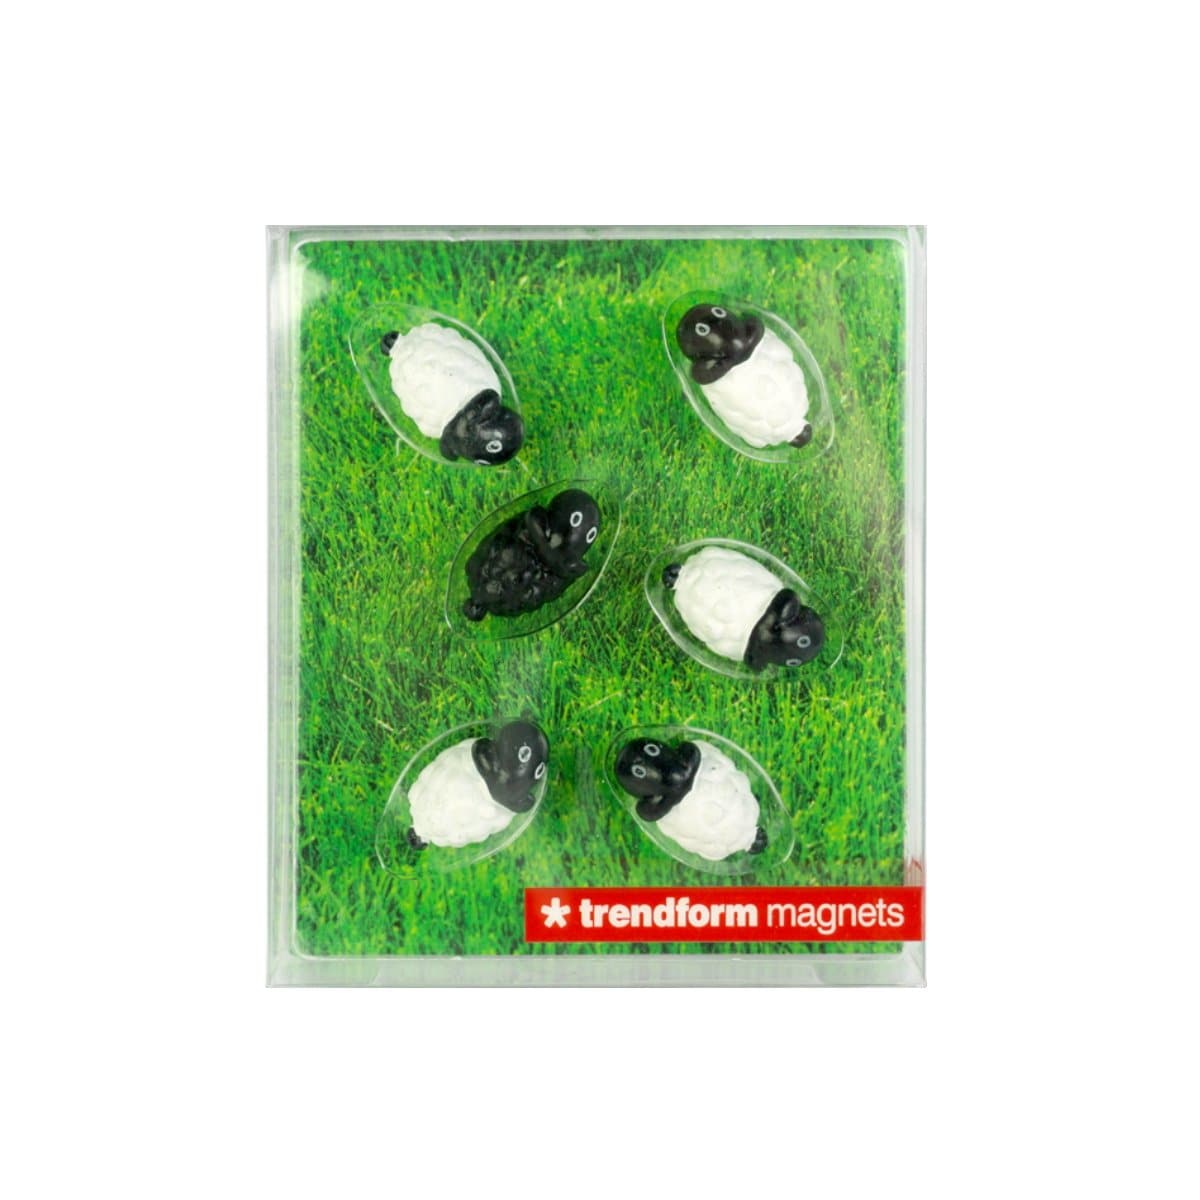 Trendform Magnets SHEEP, Set of 6, White/Black